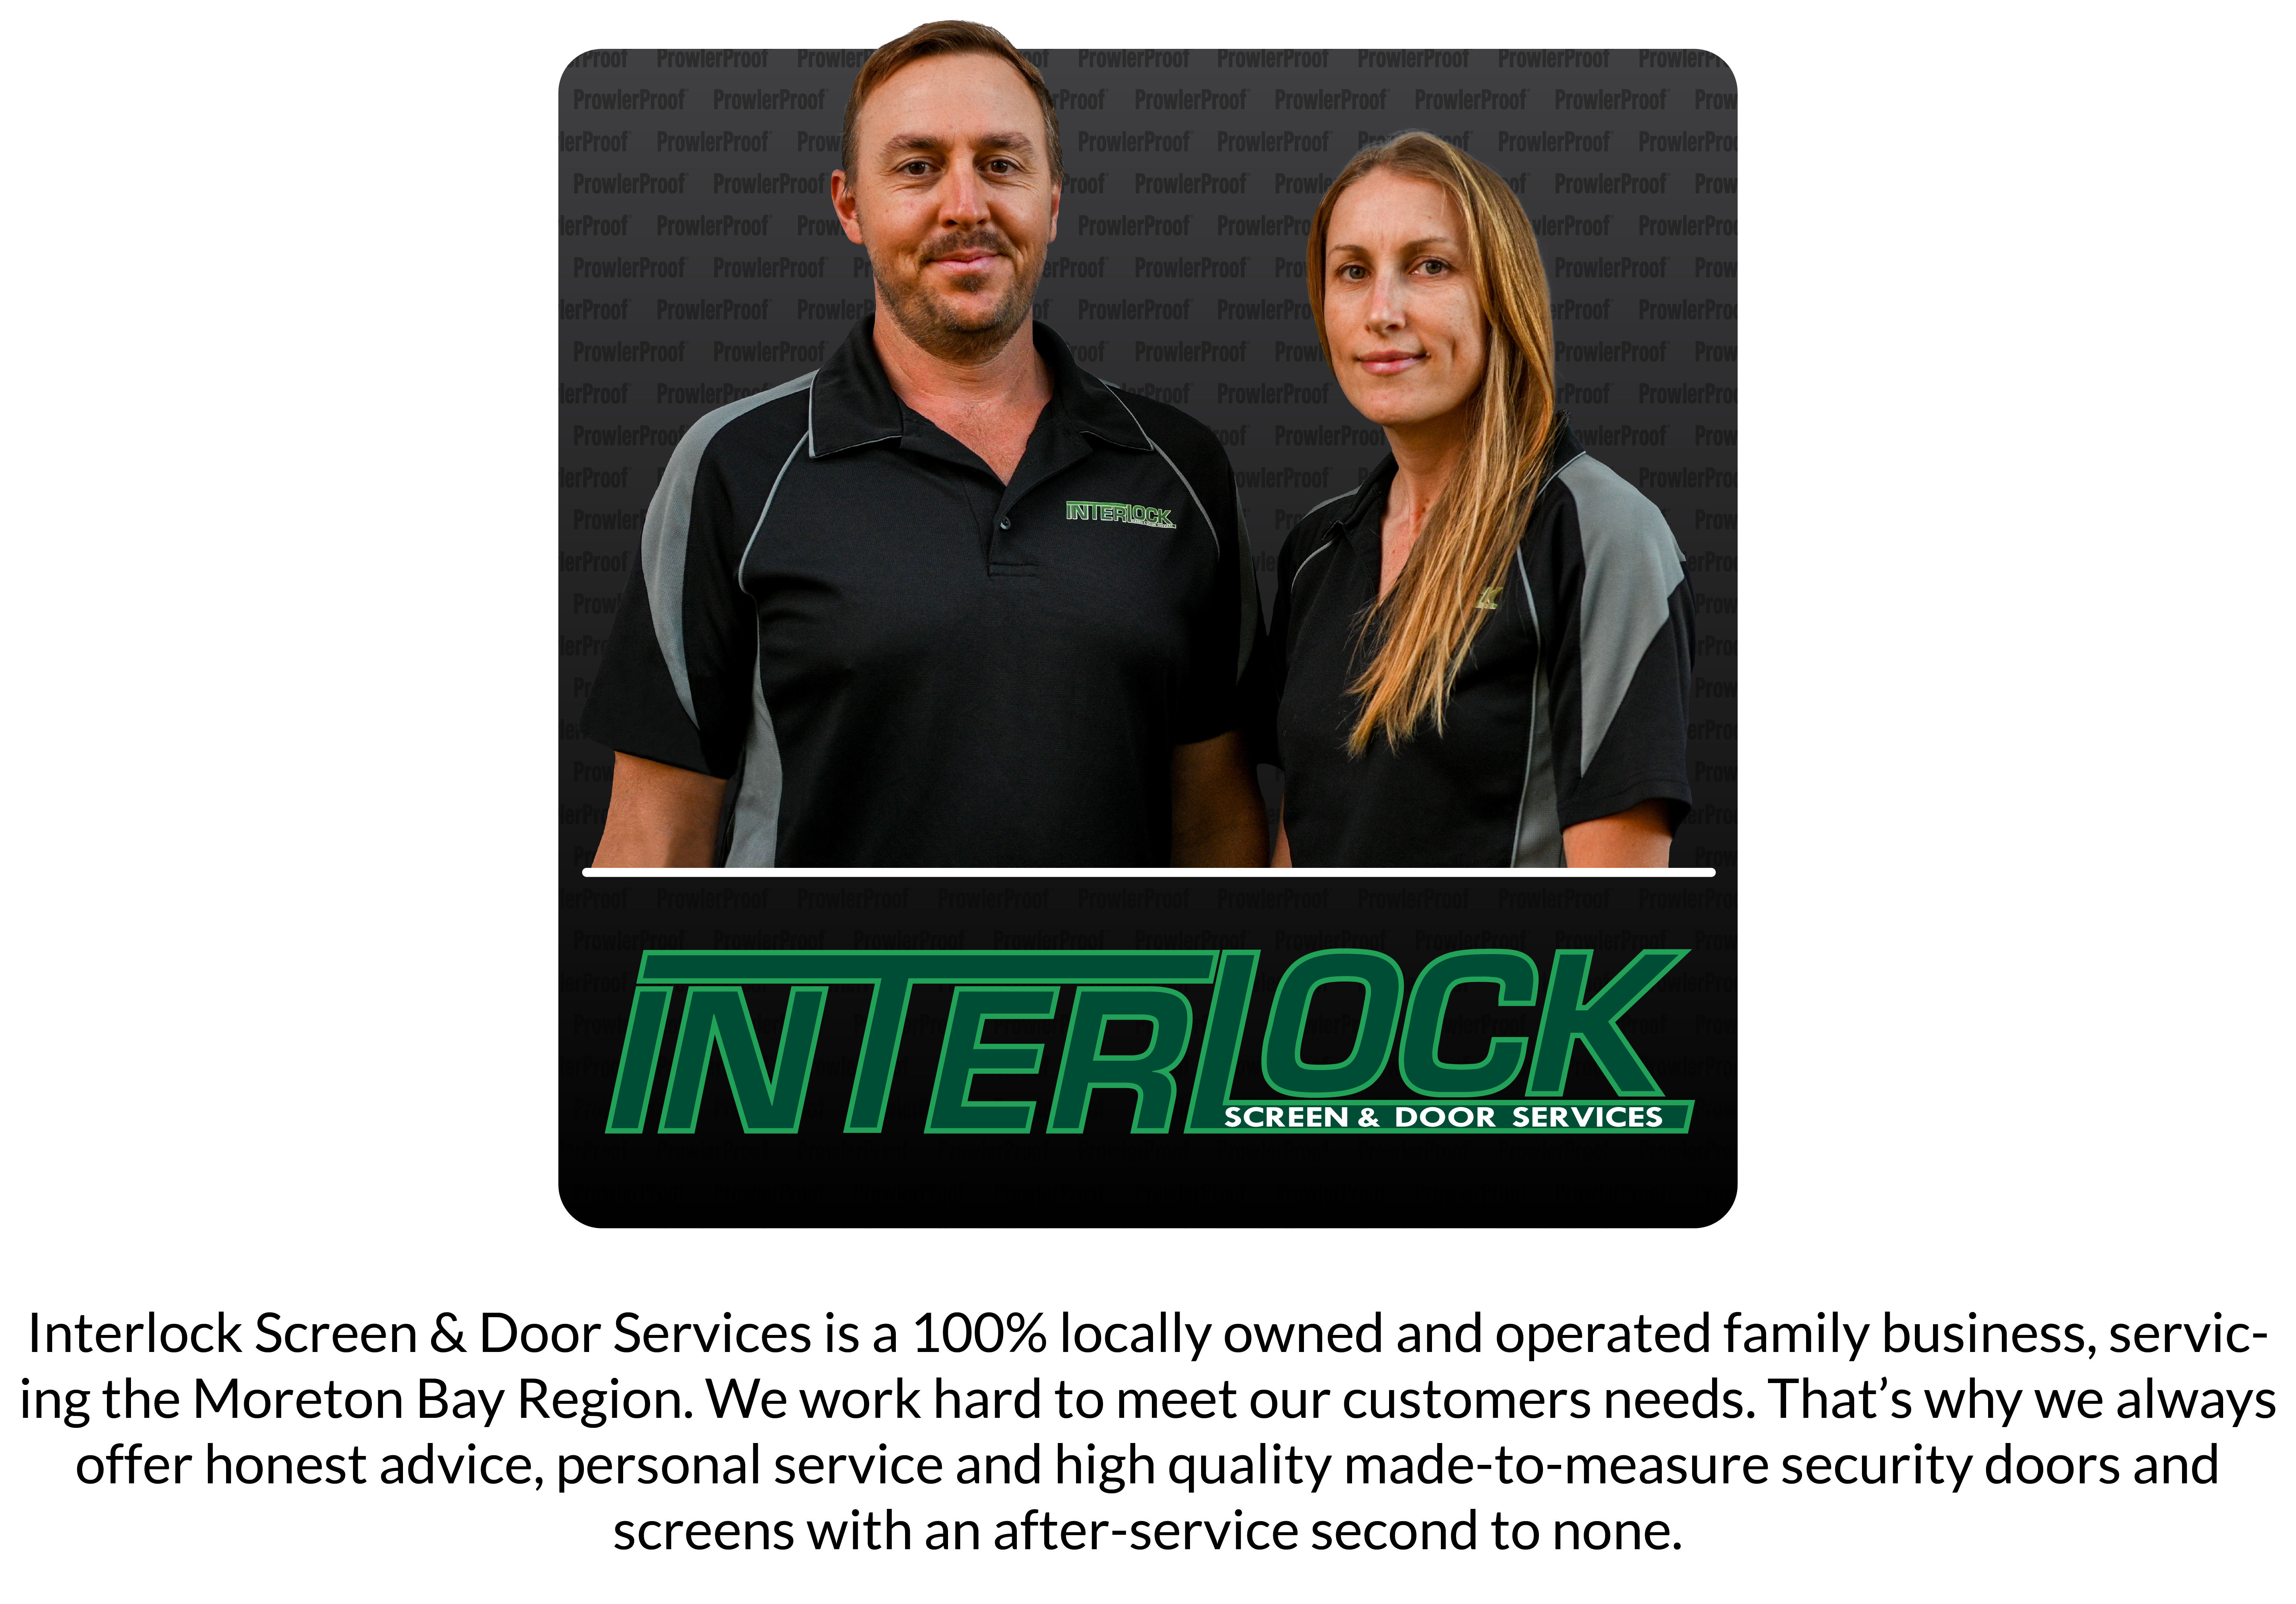 Interlock Prowler Proof Dealer Moreton Bay Region Digital Image